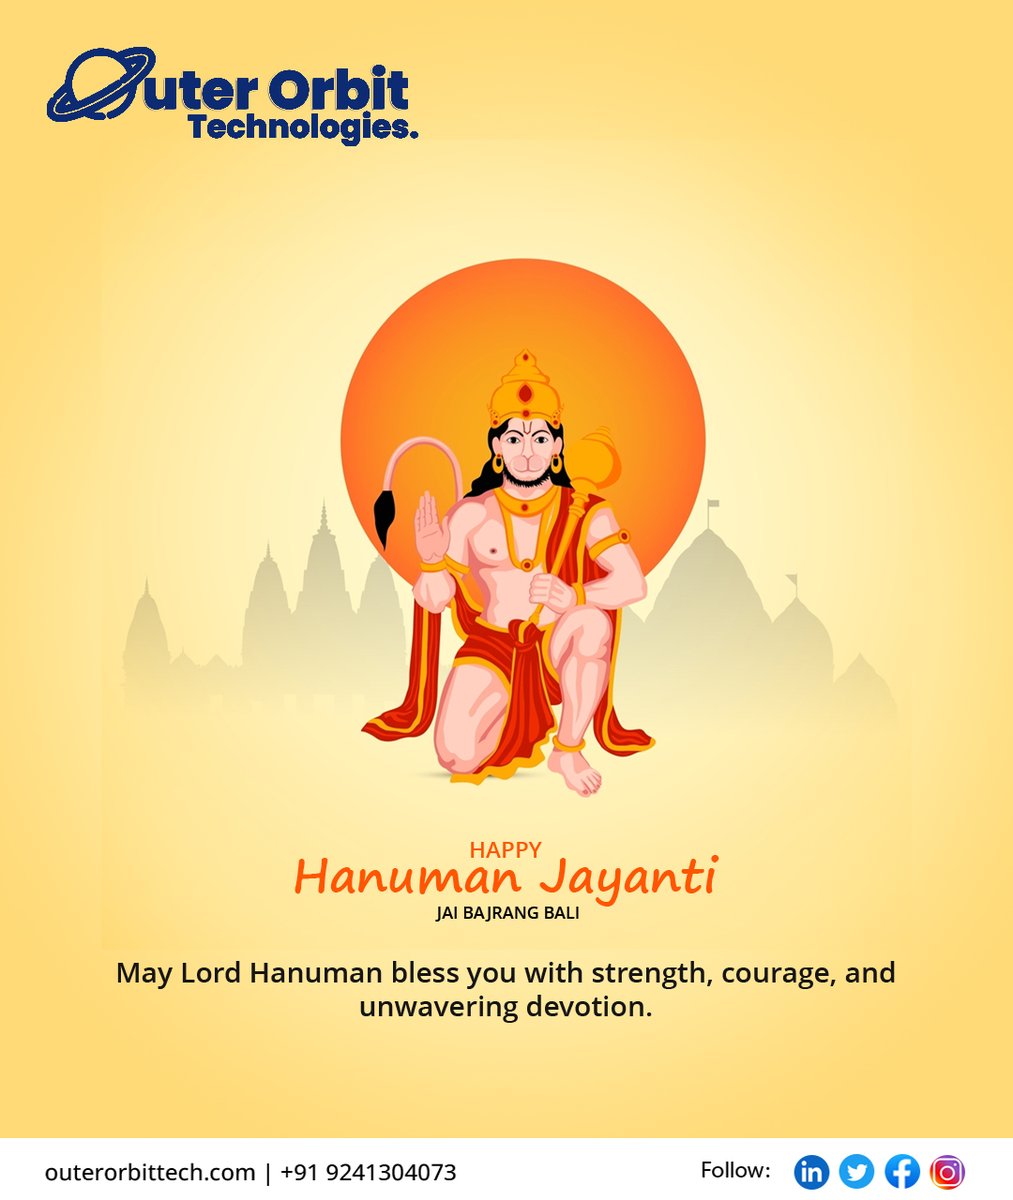 May the blessings of Lord Hanuman bring courage, strength, and wisdom into your life this Hanuman Jayanti. Jai Bajrang Bali!'
#hanumanjayanti #lordhanuman #festival #festival2024 #outerorbittech